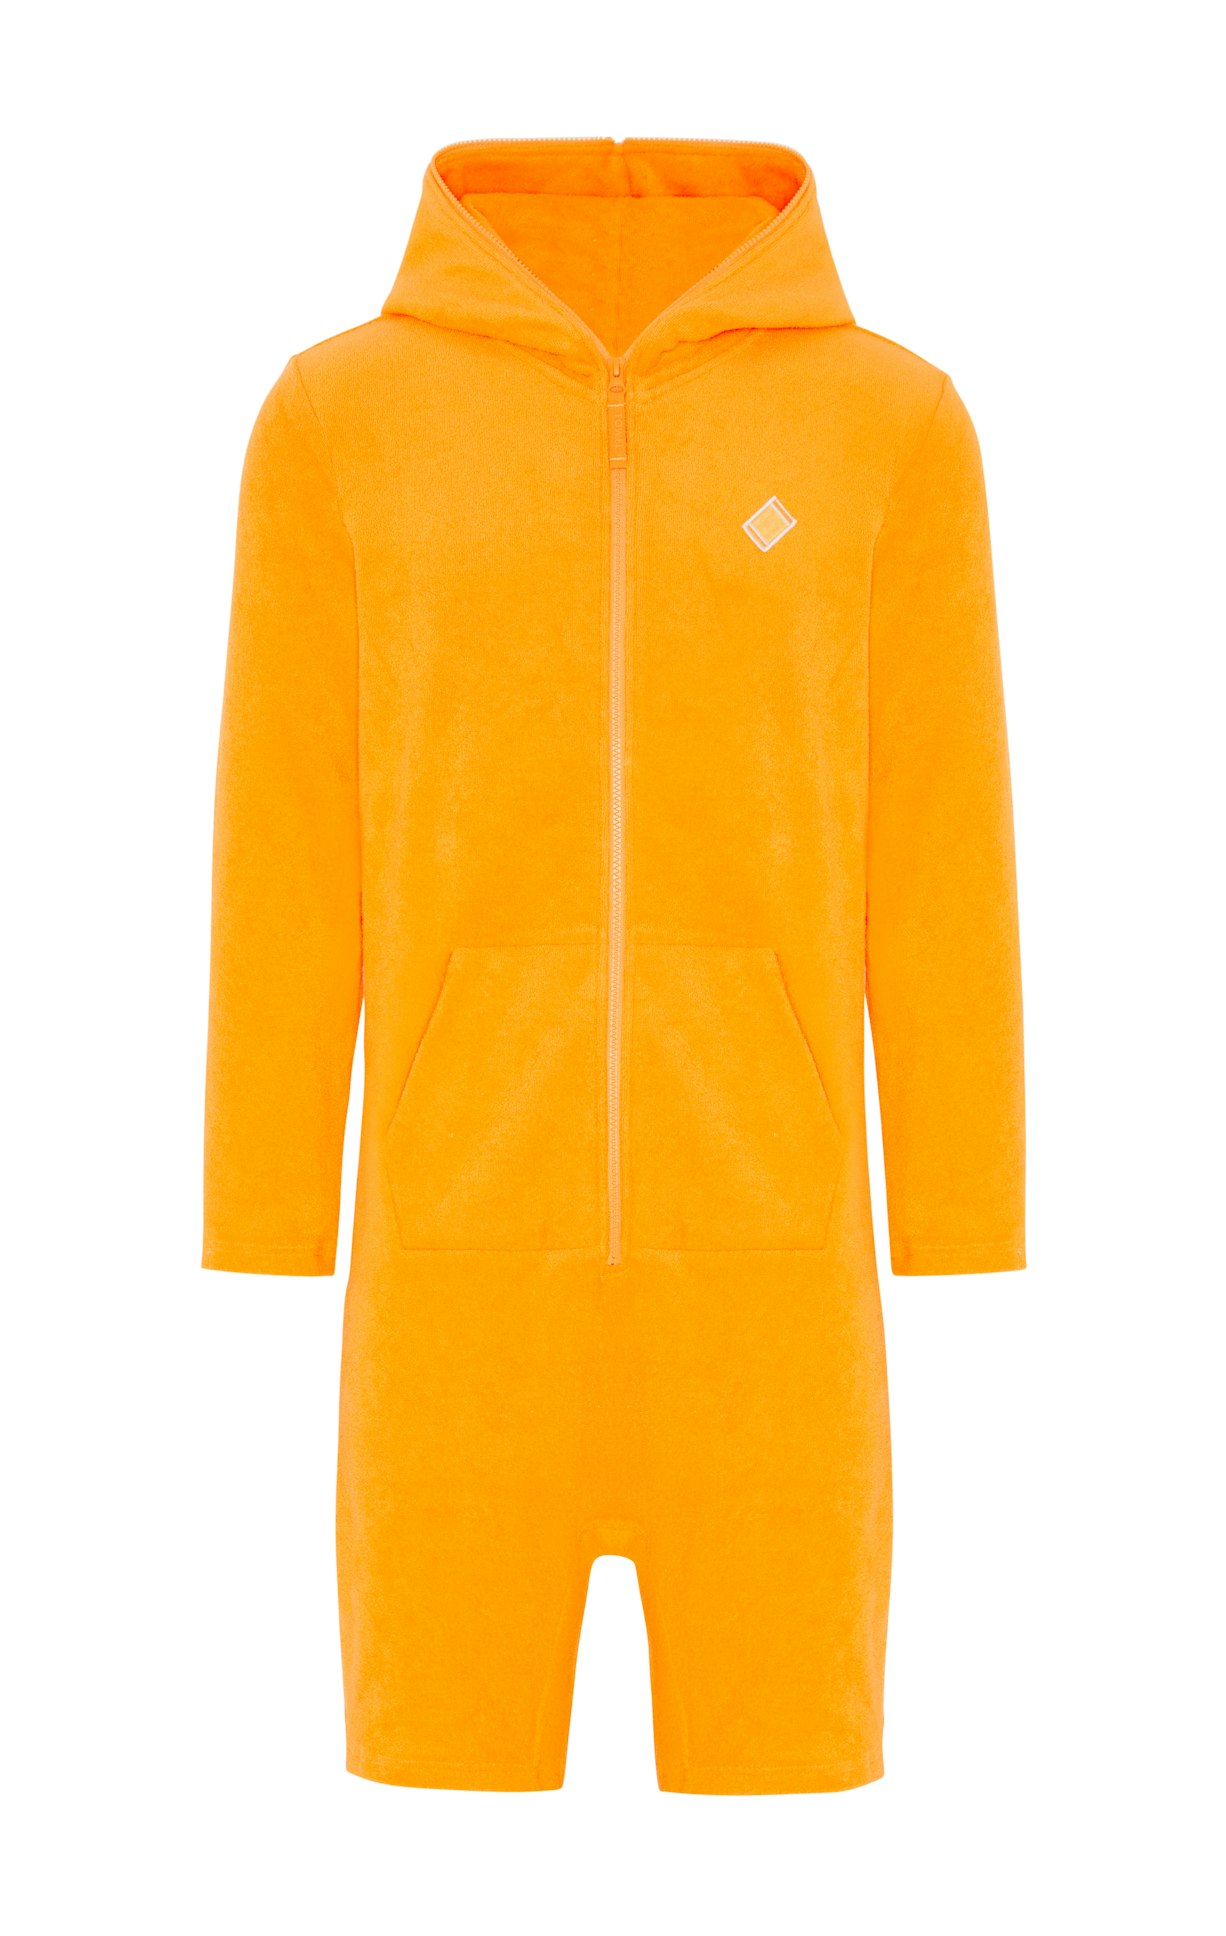 Towel Club X Onepiece Towel Jumpsuit Orange